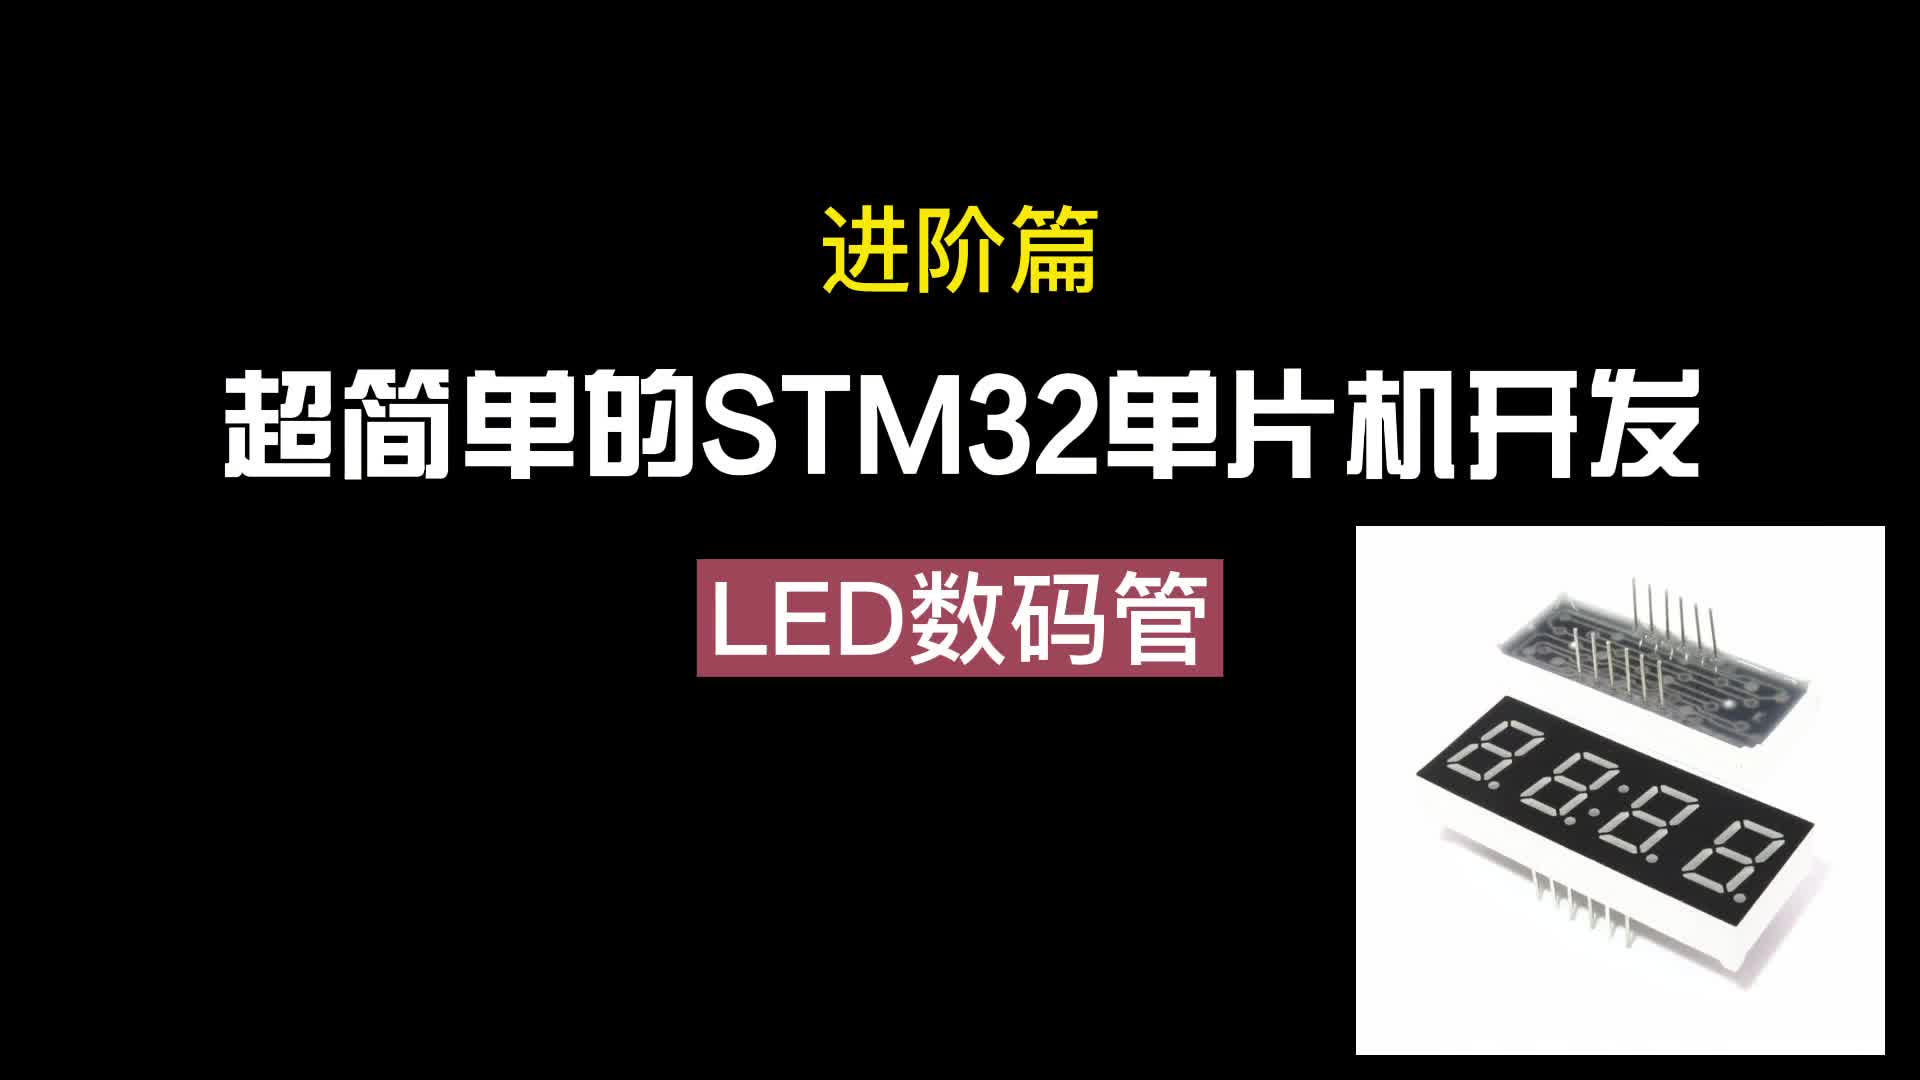 [STM32]超简单开发-进阶篇 4路LED数码管显示#硬声创作季 